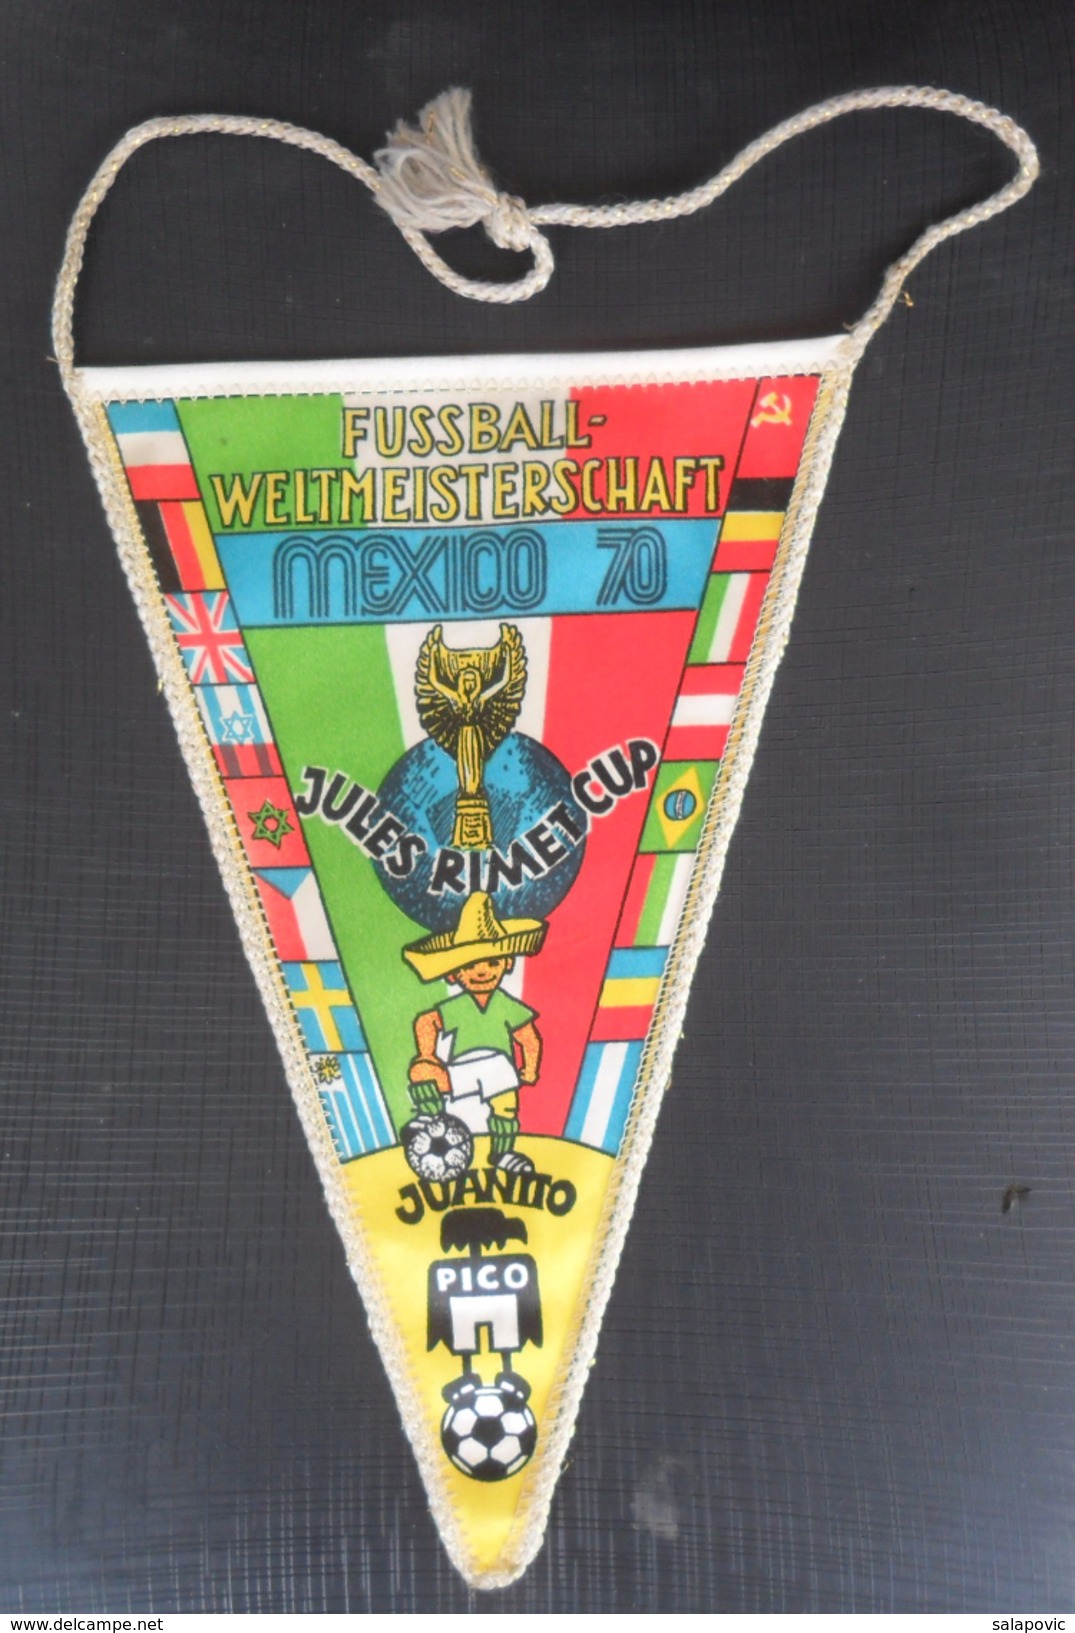 Fußball-Weltmeisterschaft 1970 Mexico,  FIFA World Cup  FOOTBALL CLUB SOCCER / FUTBOL / CALCIO, OLD PENNANT, SPORTS FLAG - Abbigliamento, Souvenirs & Varie